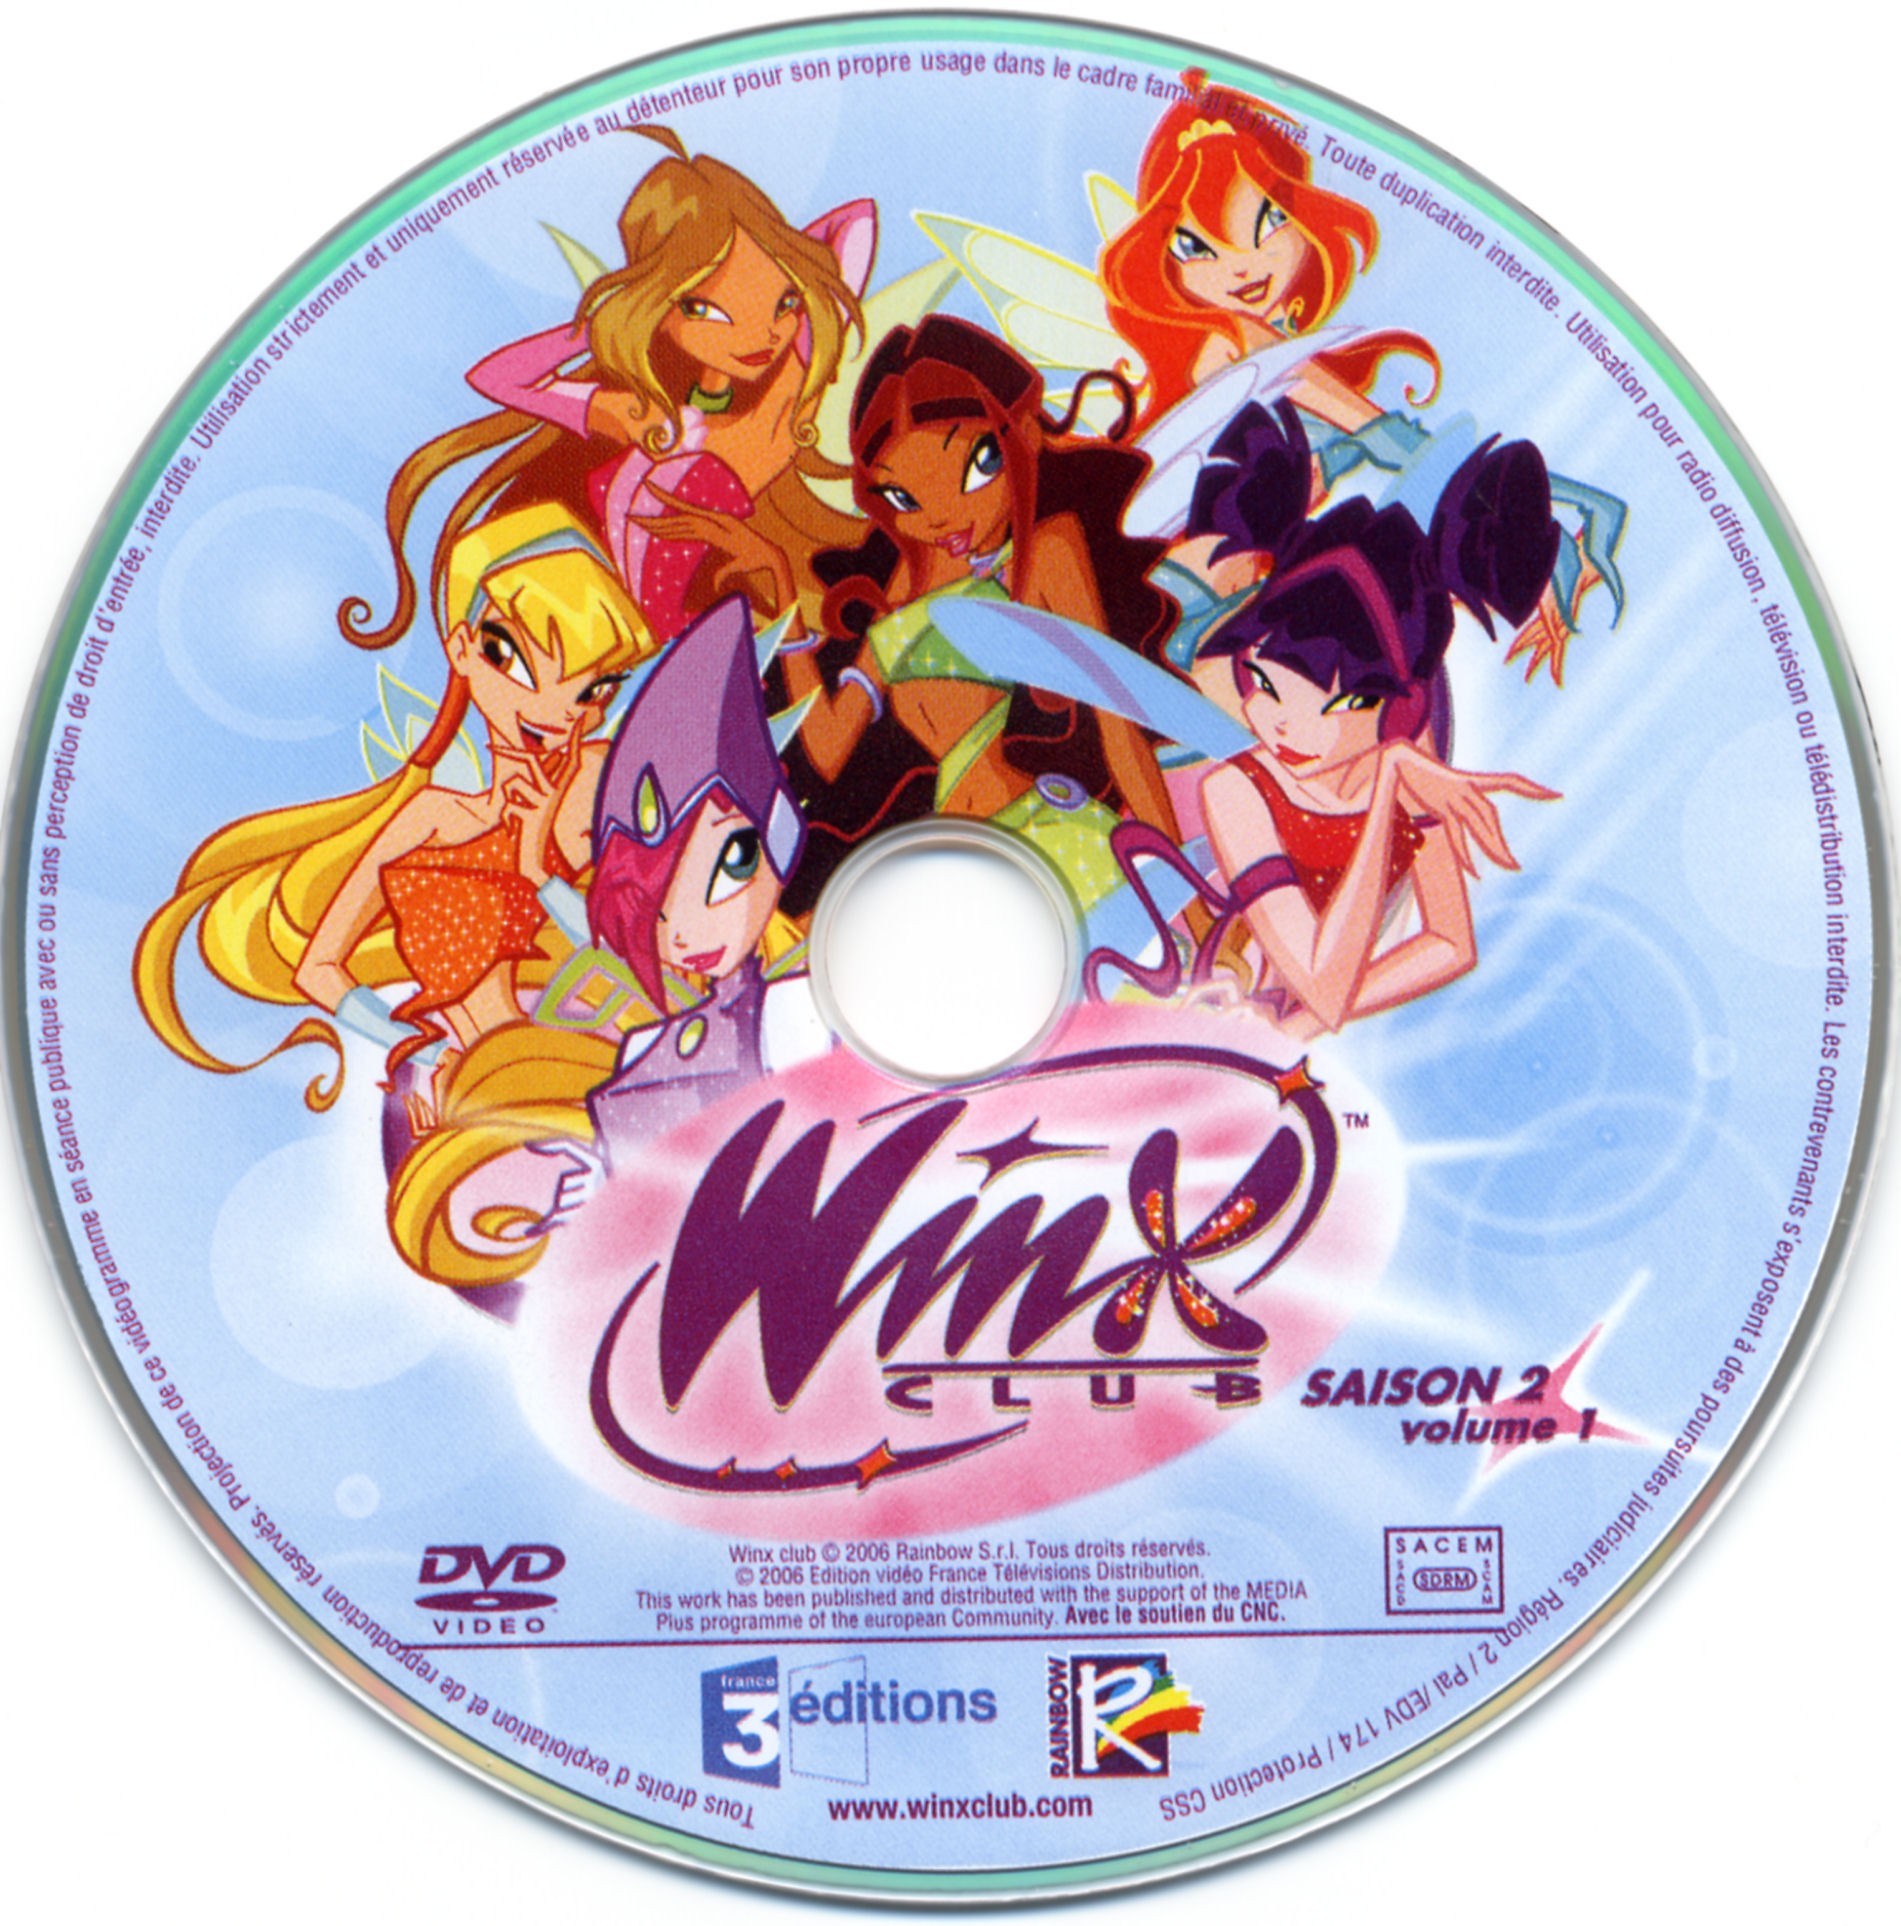 Winx Club Saison 2 vol 1